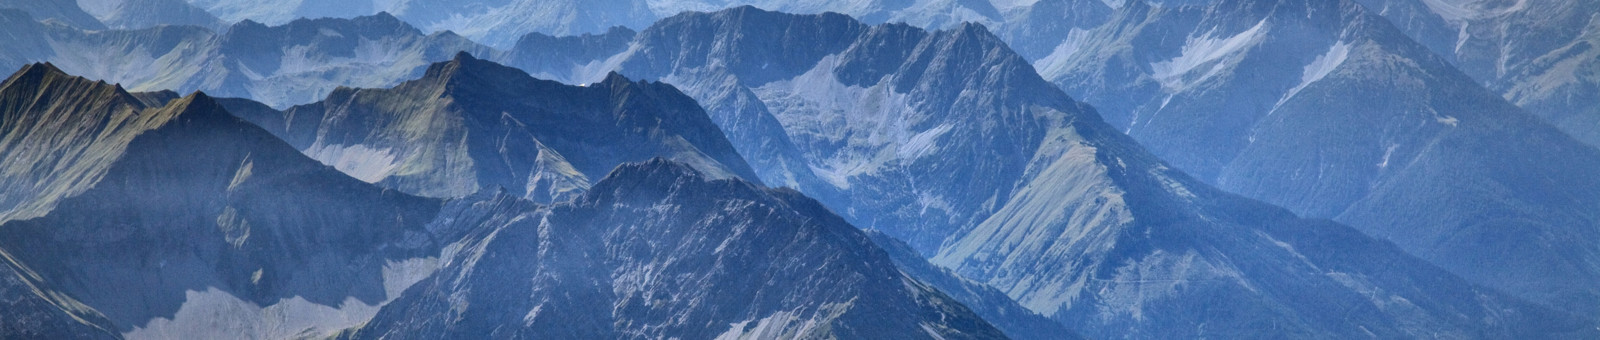     Lechtaler Alps, Tyrol 